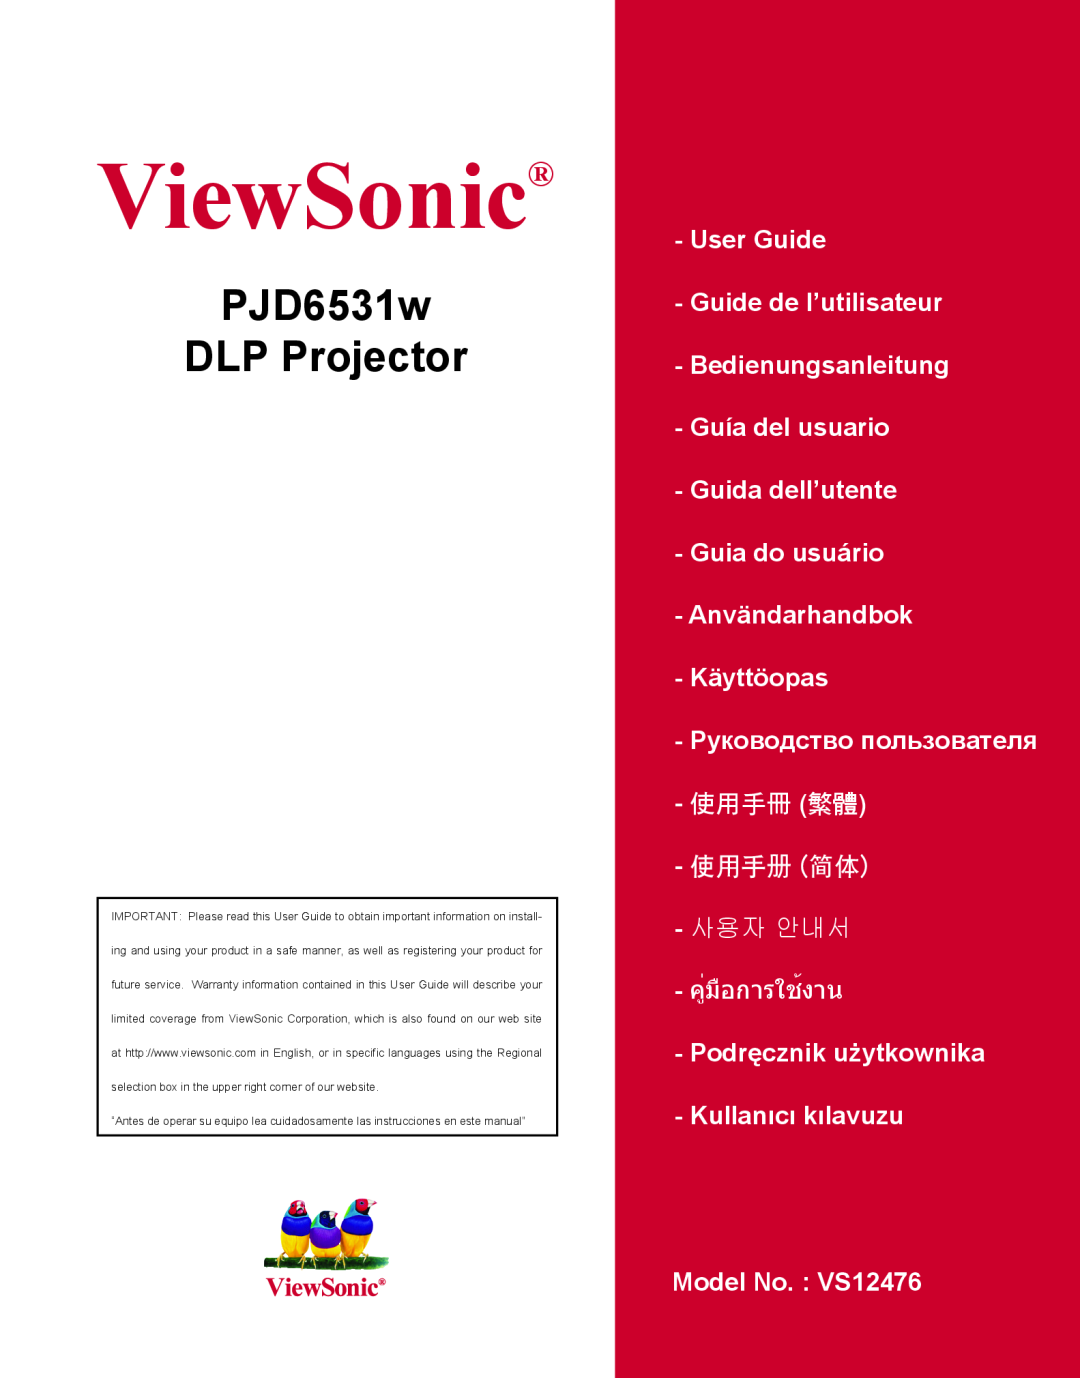 ViewSonic VS12476 warranty PJD6531w DLP Projector, ViewSonic, User Guide Guide de l’utilisateur Bedienungsanleitung 